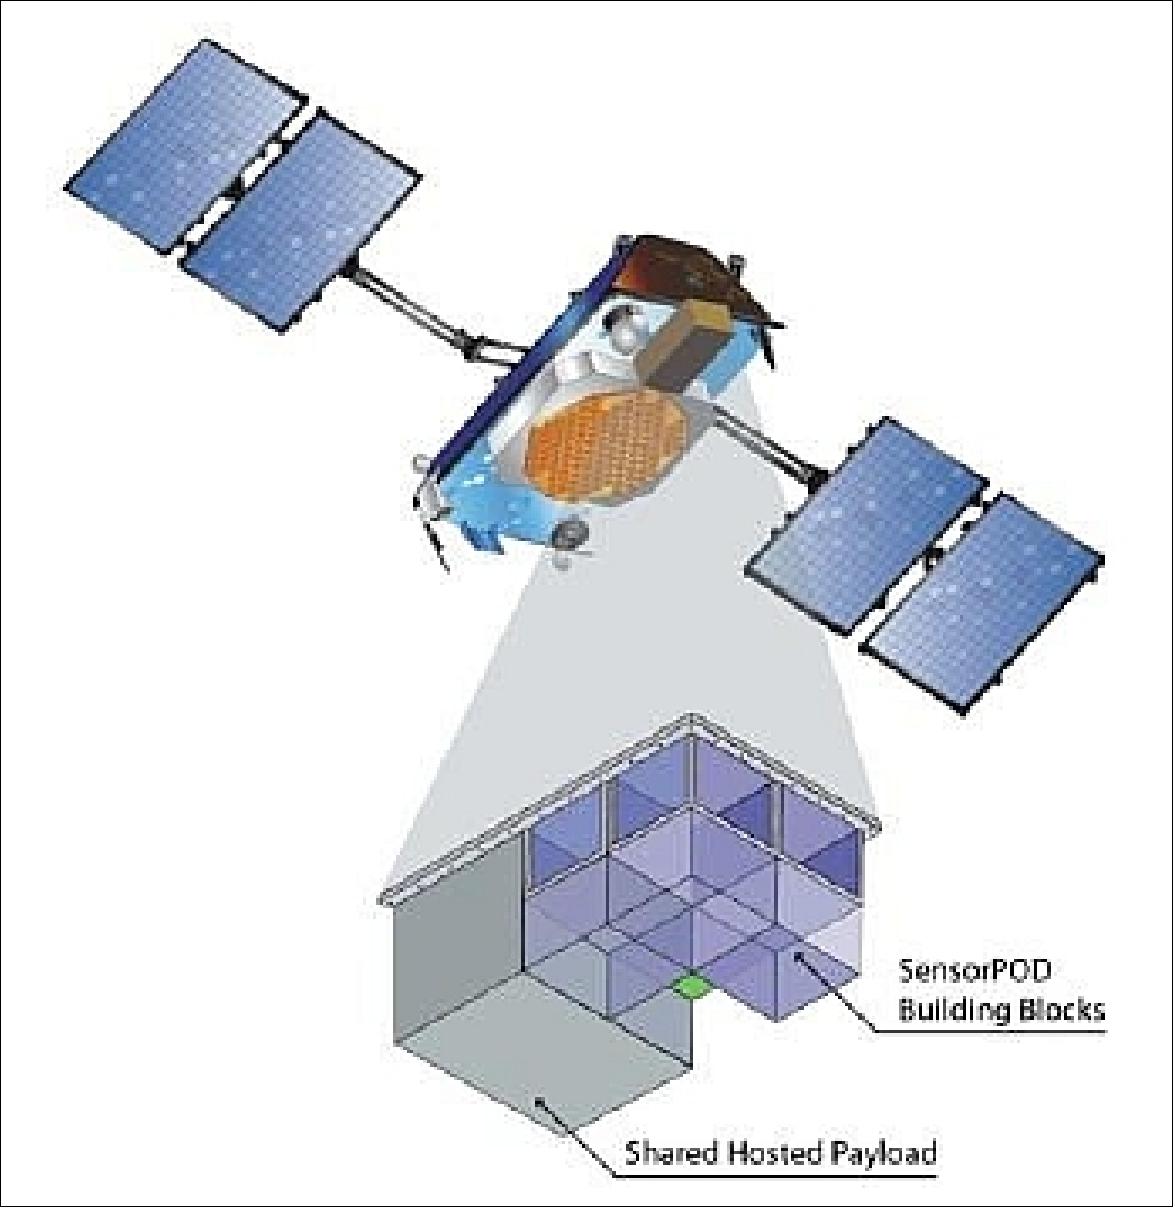 Figure 1: SensorPod of Iridium Next (image credit: Iridium Satellite)